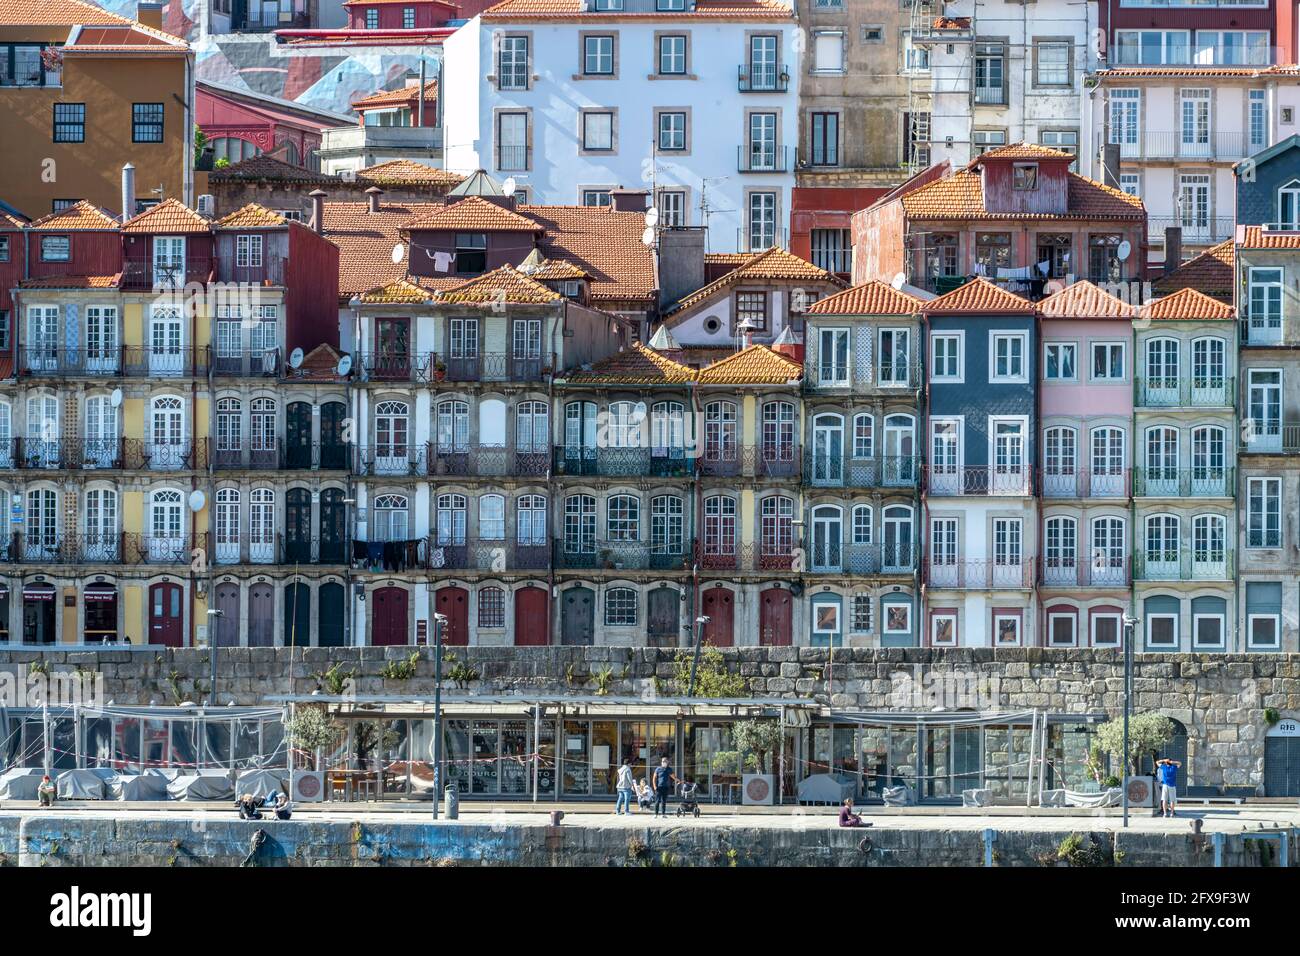 Typische Häuser in der Altstadt von Porto, Portugal, Europa   |  typical homes of the historic old town of Porto, Portugal, Europe Stock Photo